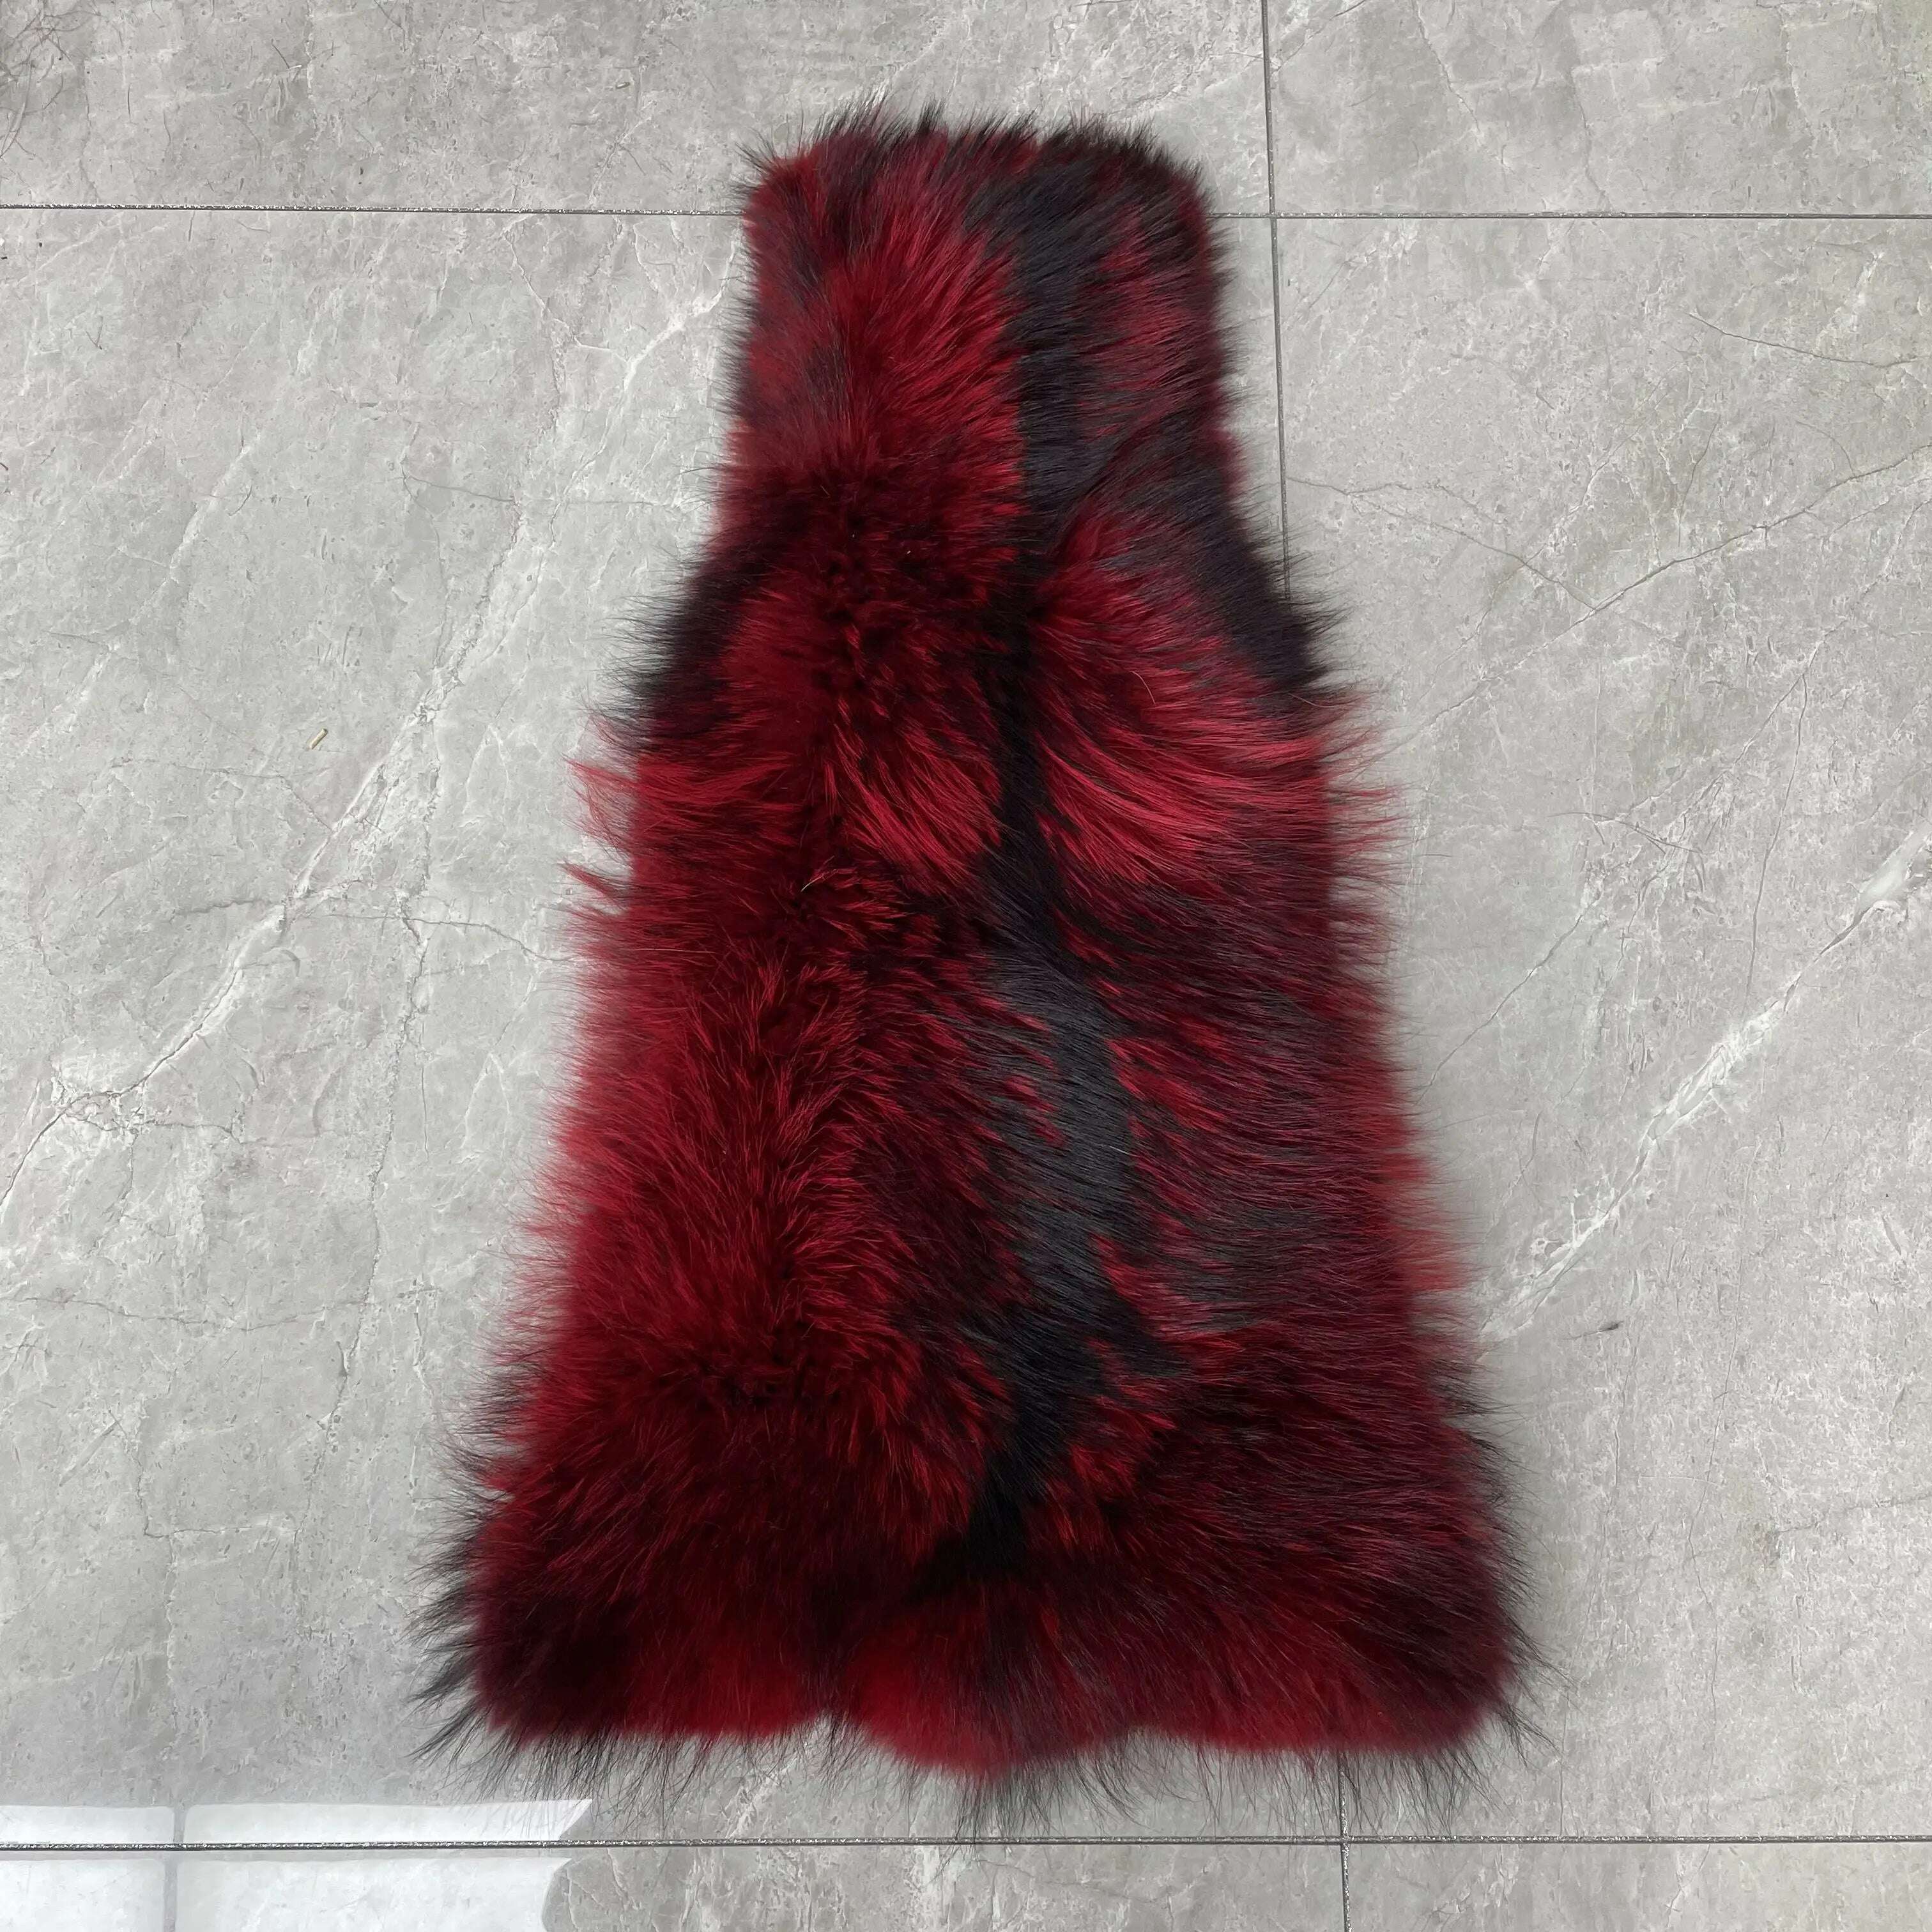 KIMLUD, Wholeskin Men Golden Fox Fur Long Coats Shawl Collar Winter Overcoats Genuine Natural Fox Furs Jacket, RED / XS(88cm), KIMLUD Womens Clothes